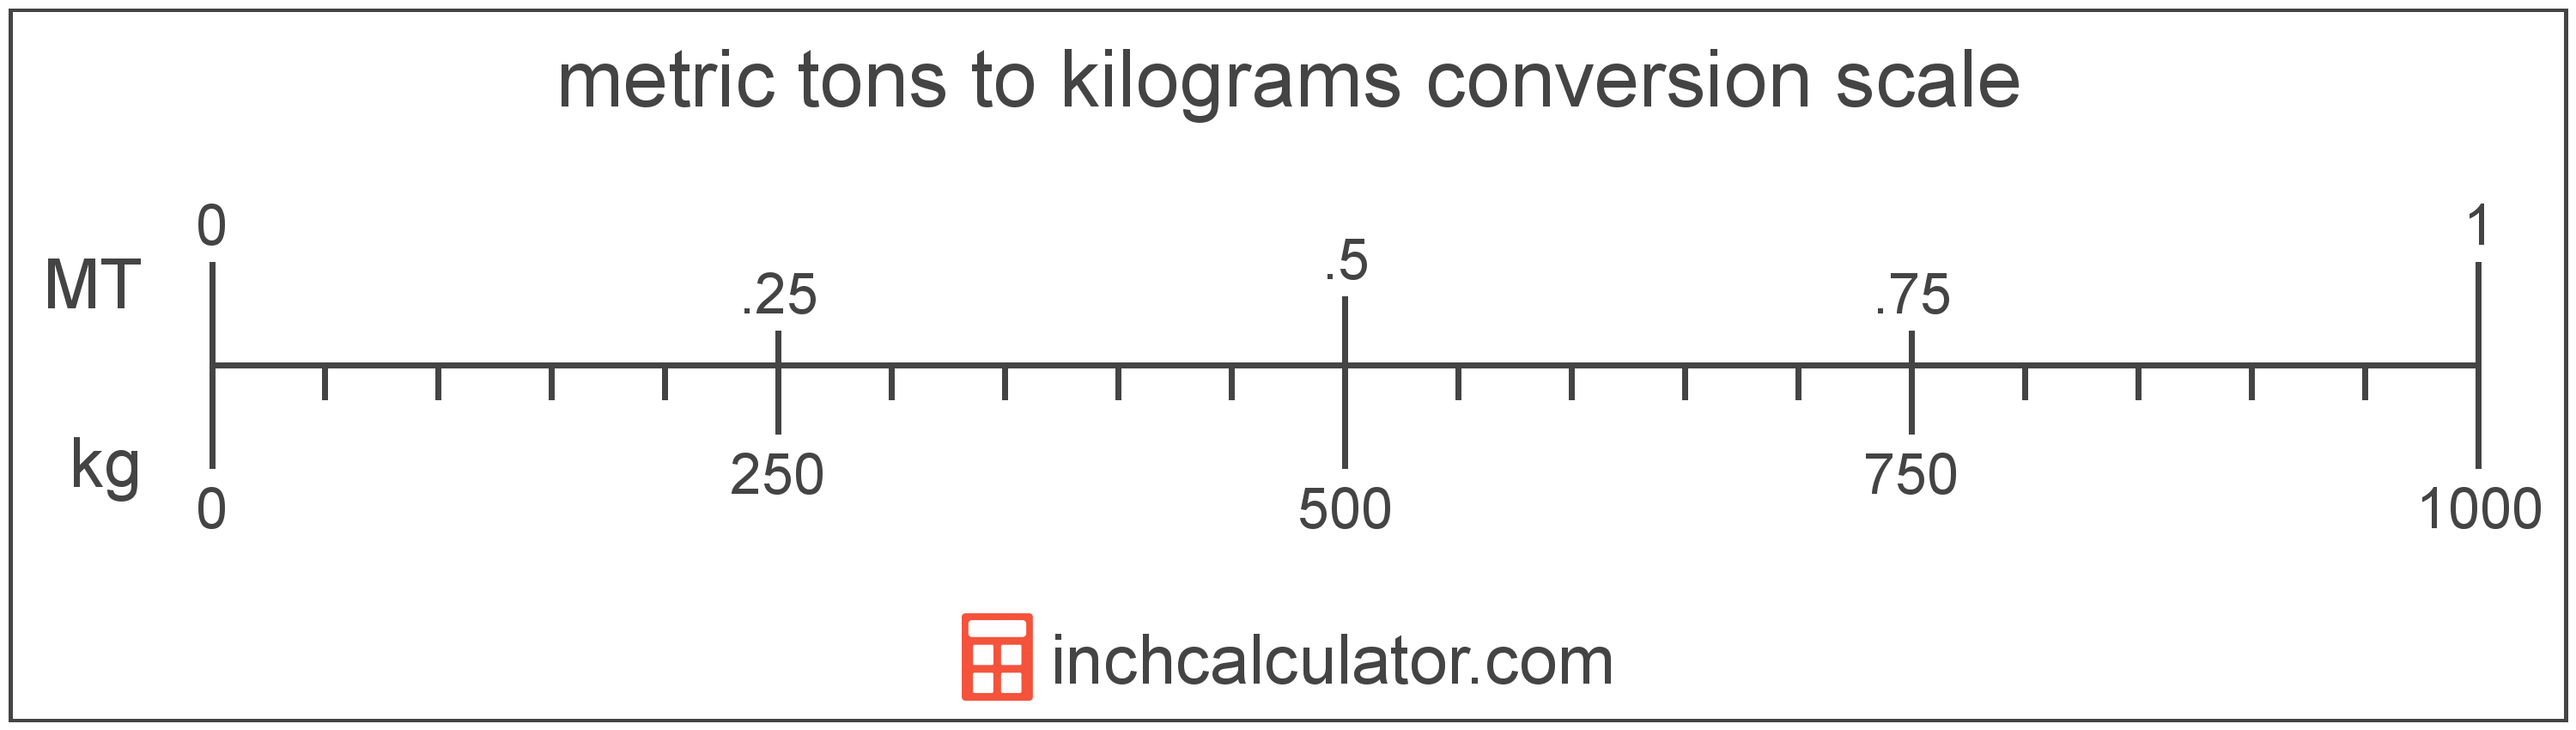 Sydamerika Vores firma excentrisk Metric Tons (Tonnes) to Kilograms Conversion (t to kg)